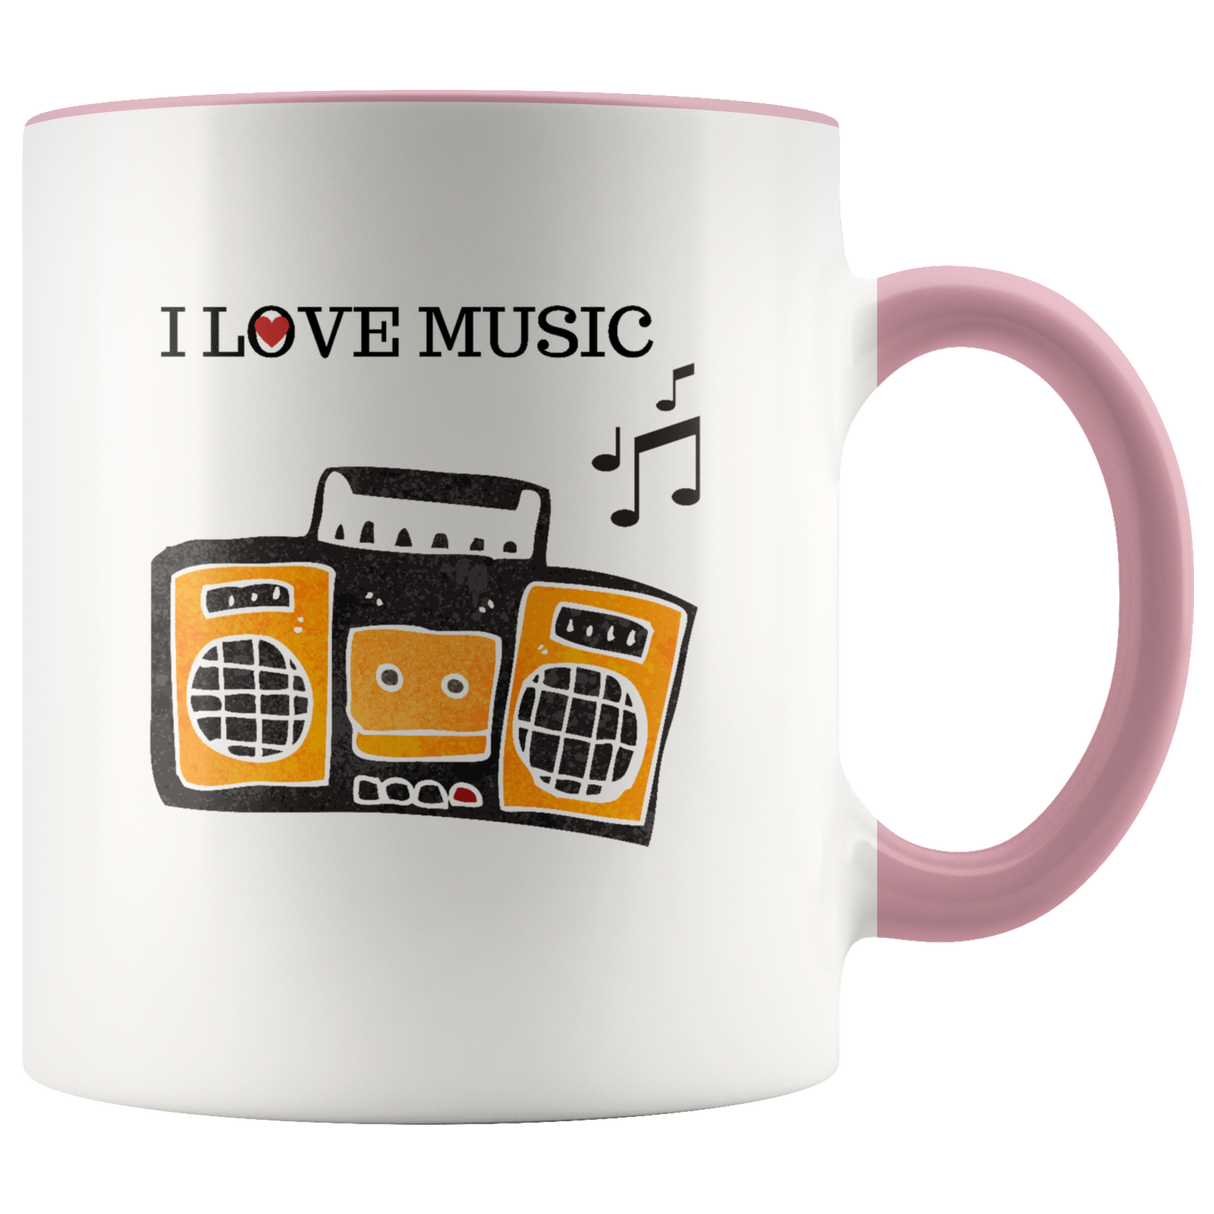 Mug I Love Music Ceramic Accent Mug - Pink | Shop Sassy Chick